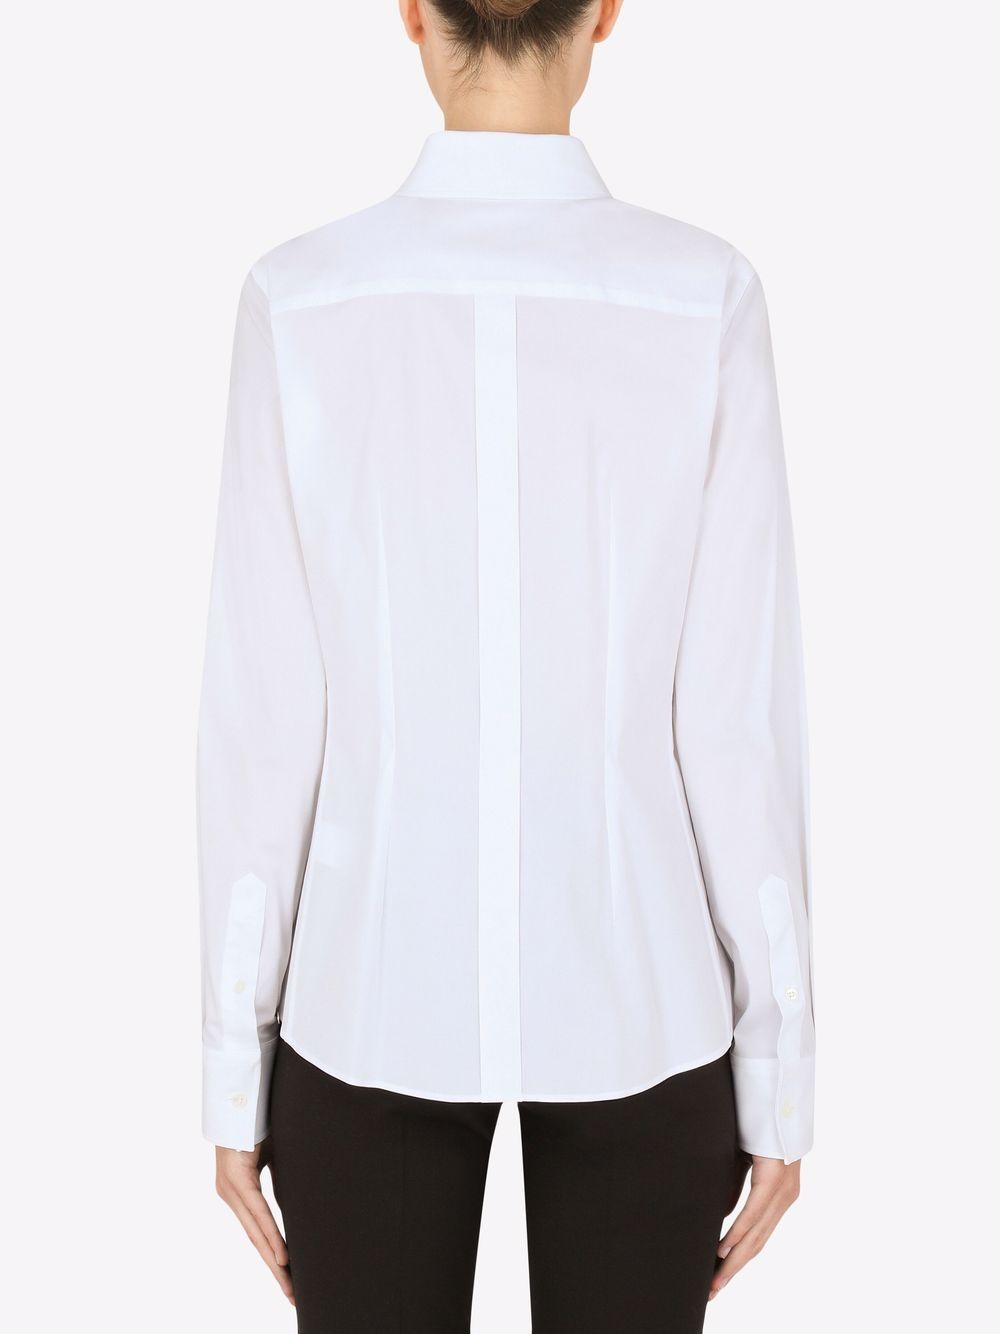 White cotton long-sleeve button-fastening shirt